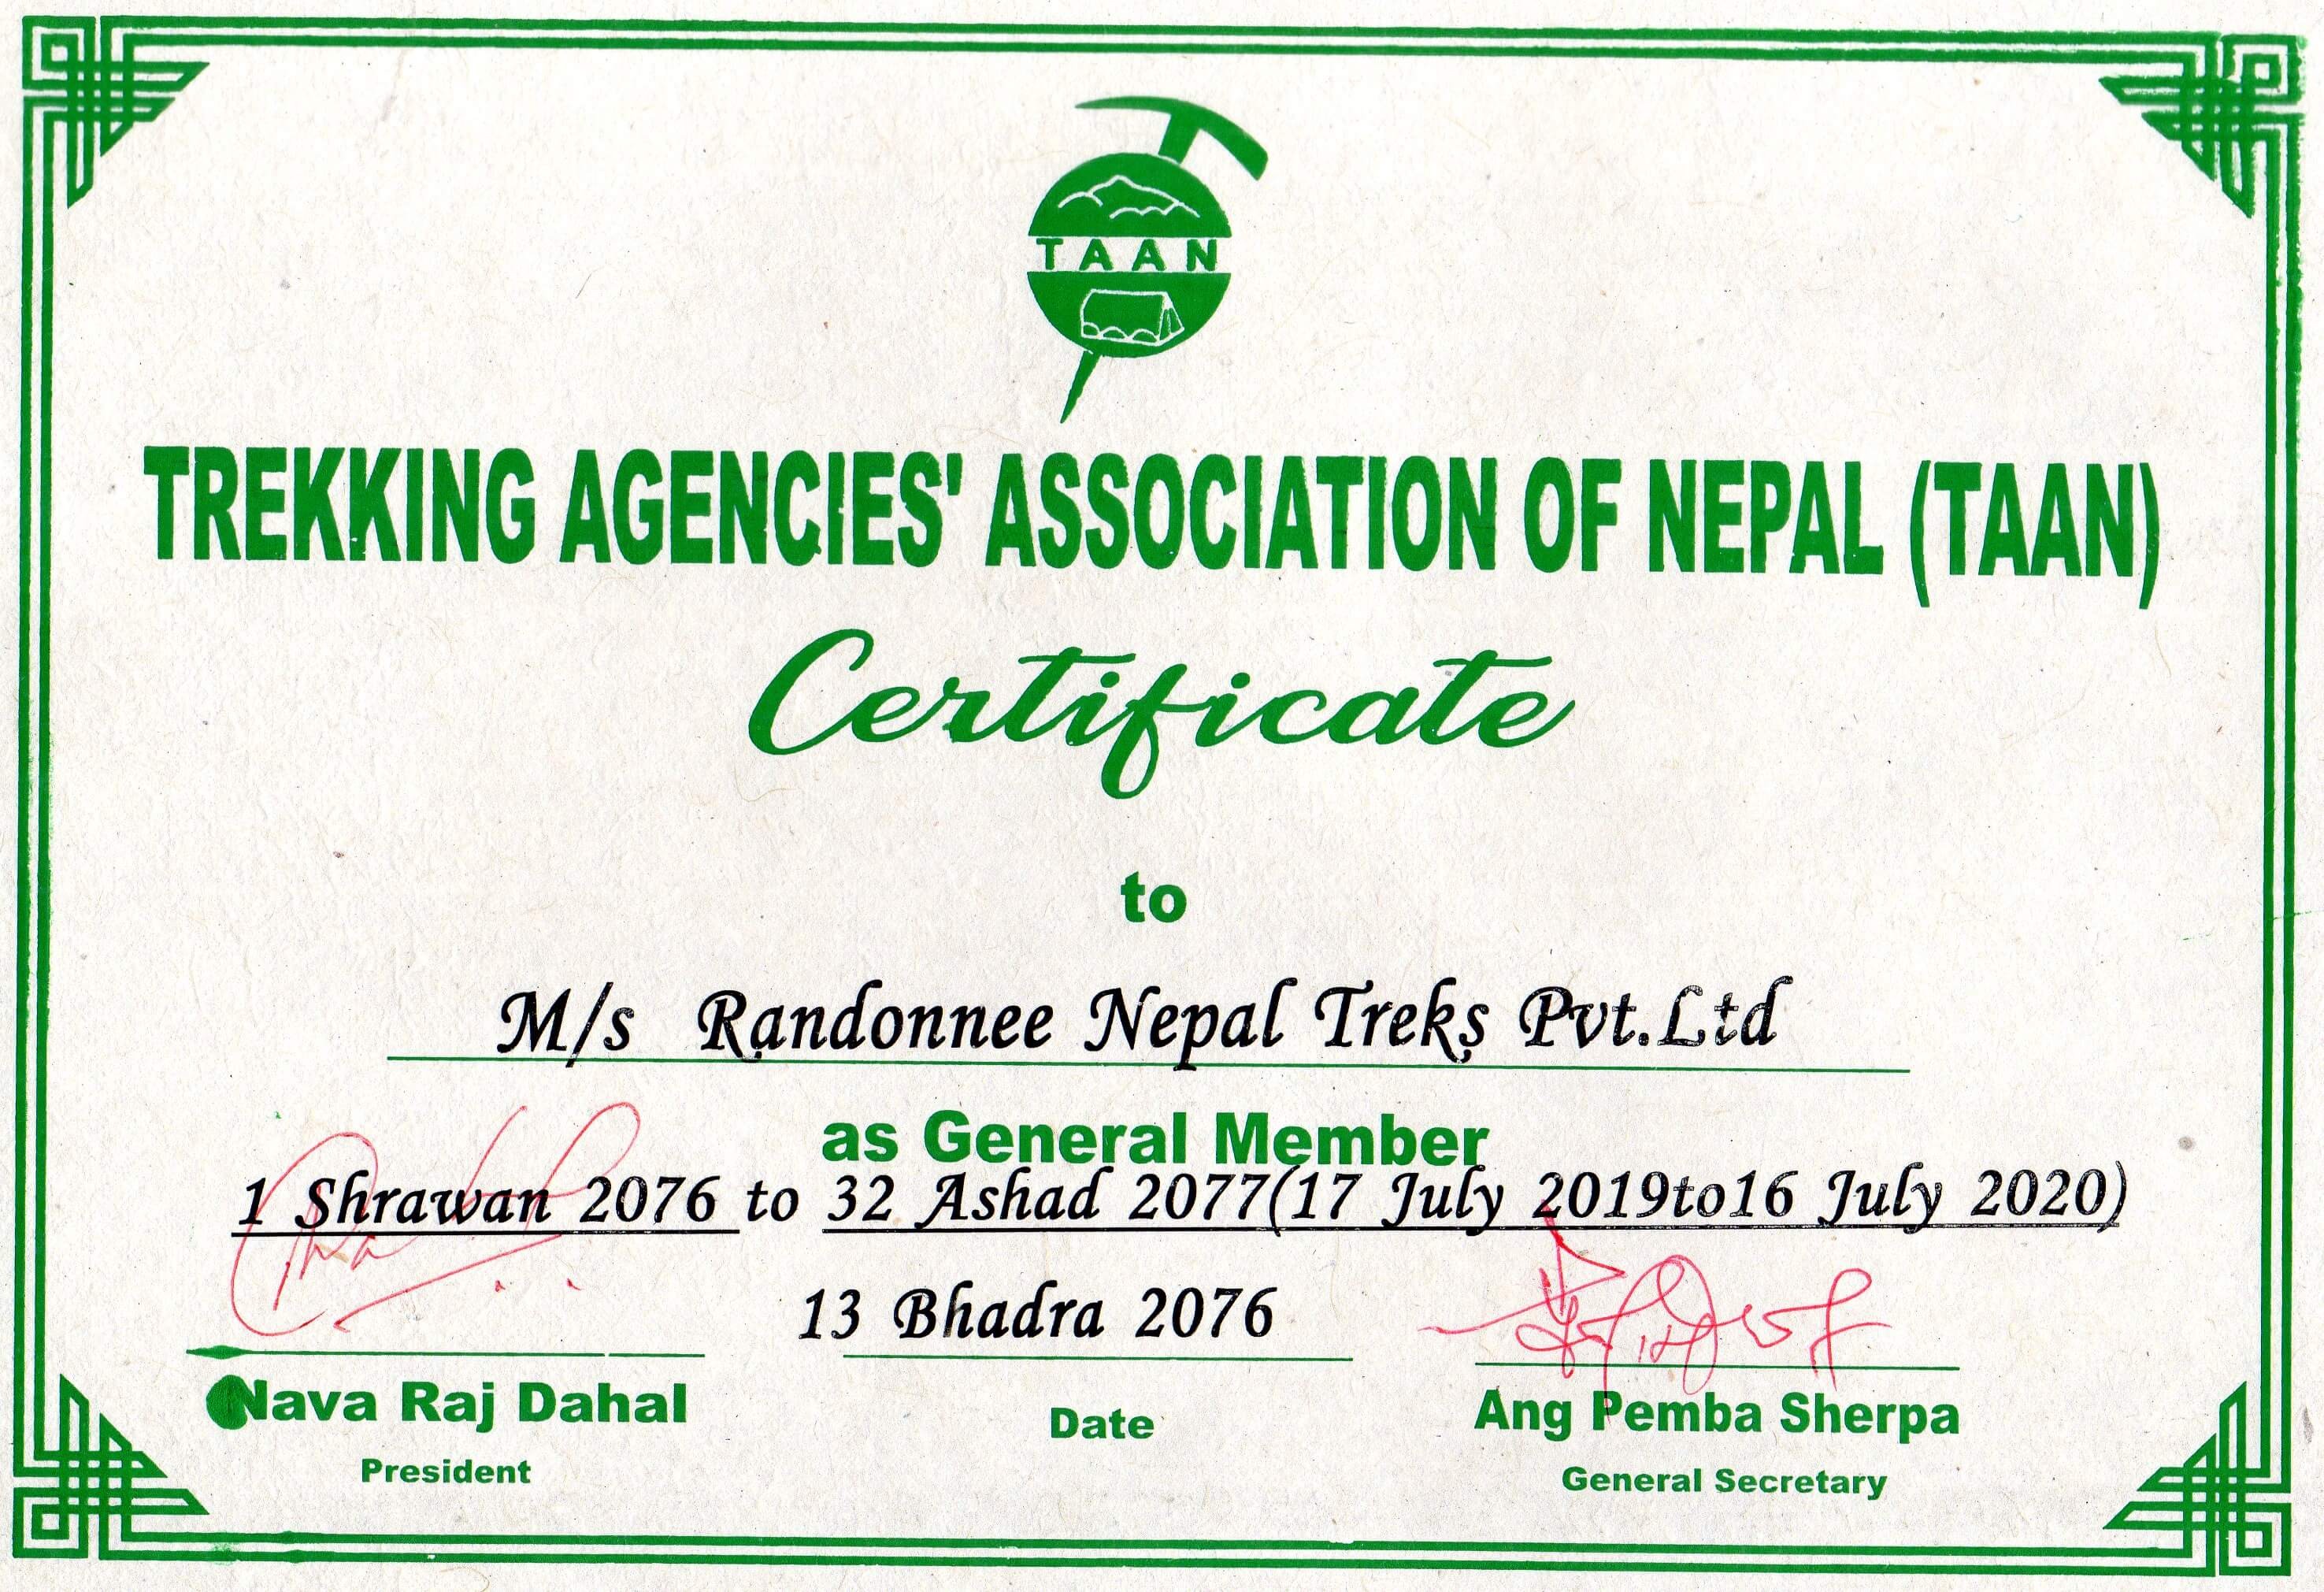 Membership Certificate of Trekking Agencies Association of Nepal